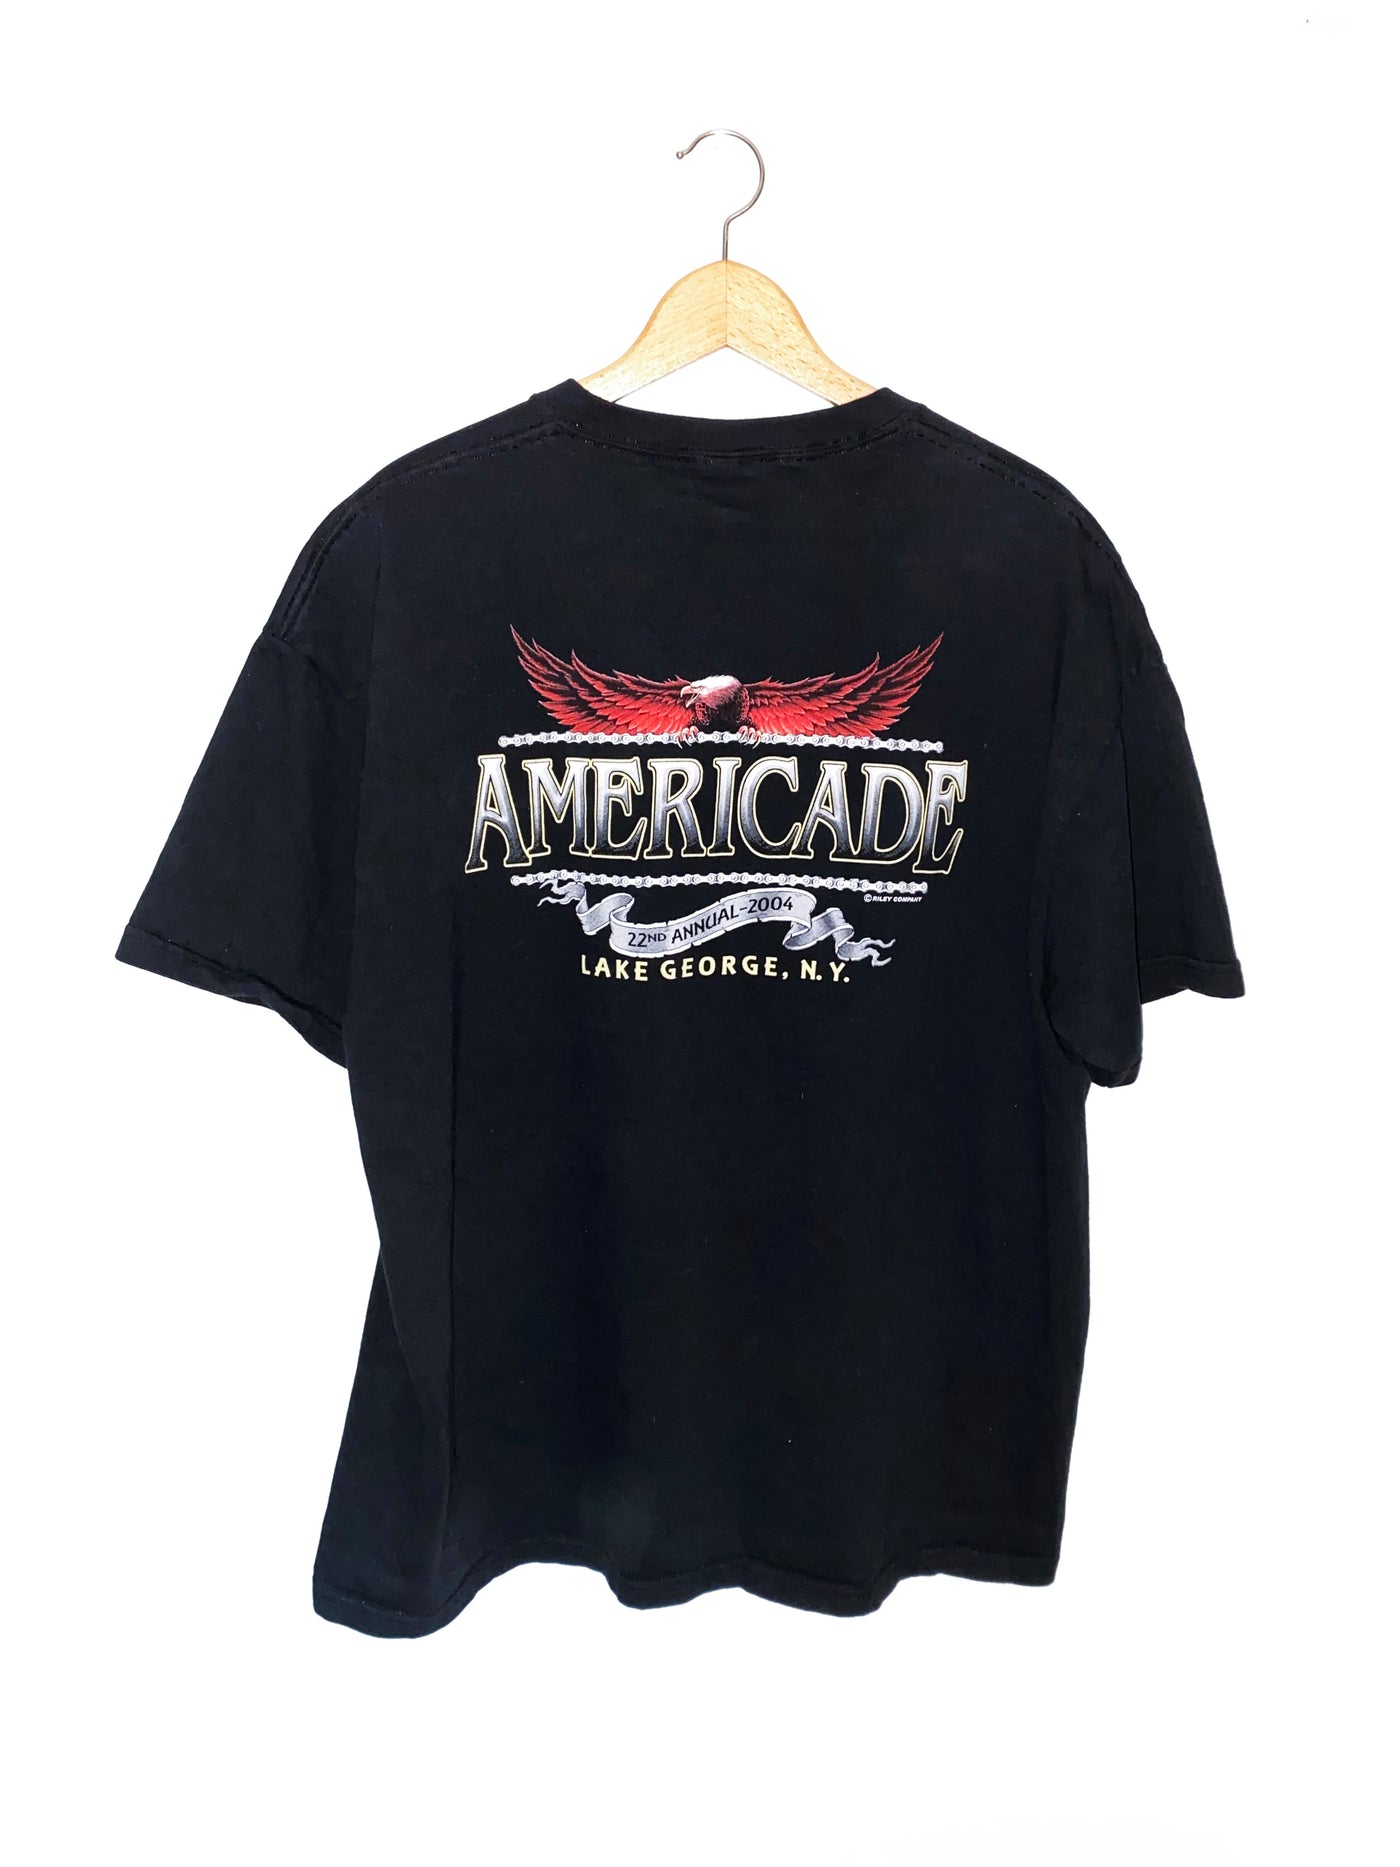 2004 Lake George Americade Graphic T-Shirt